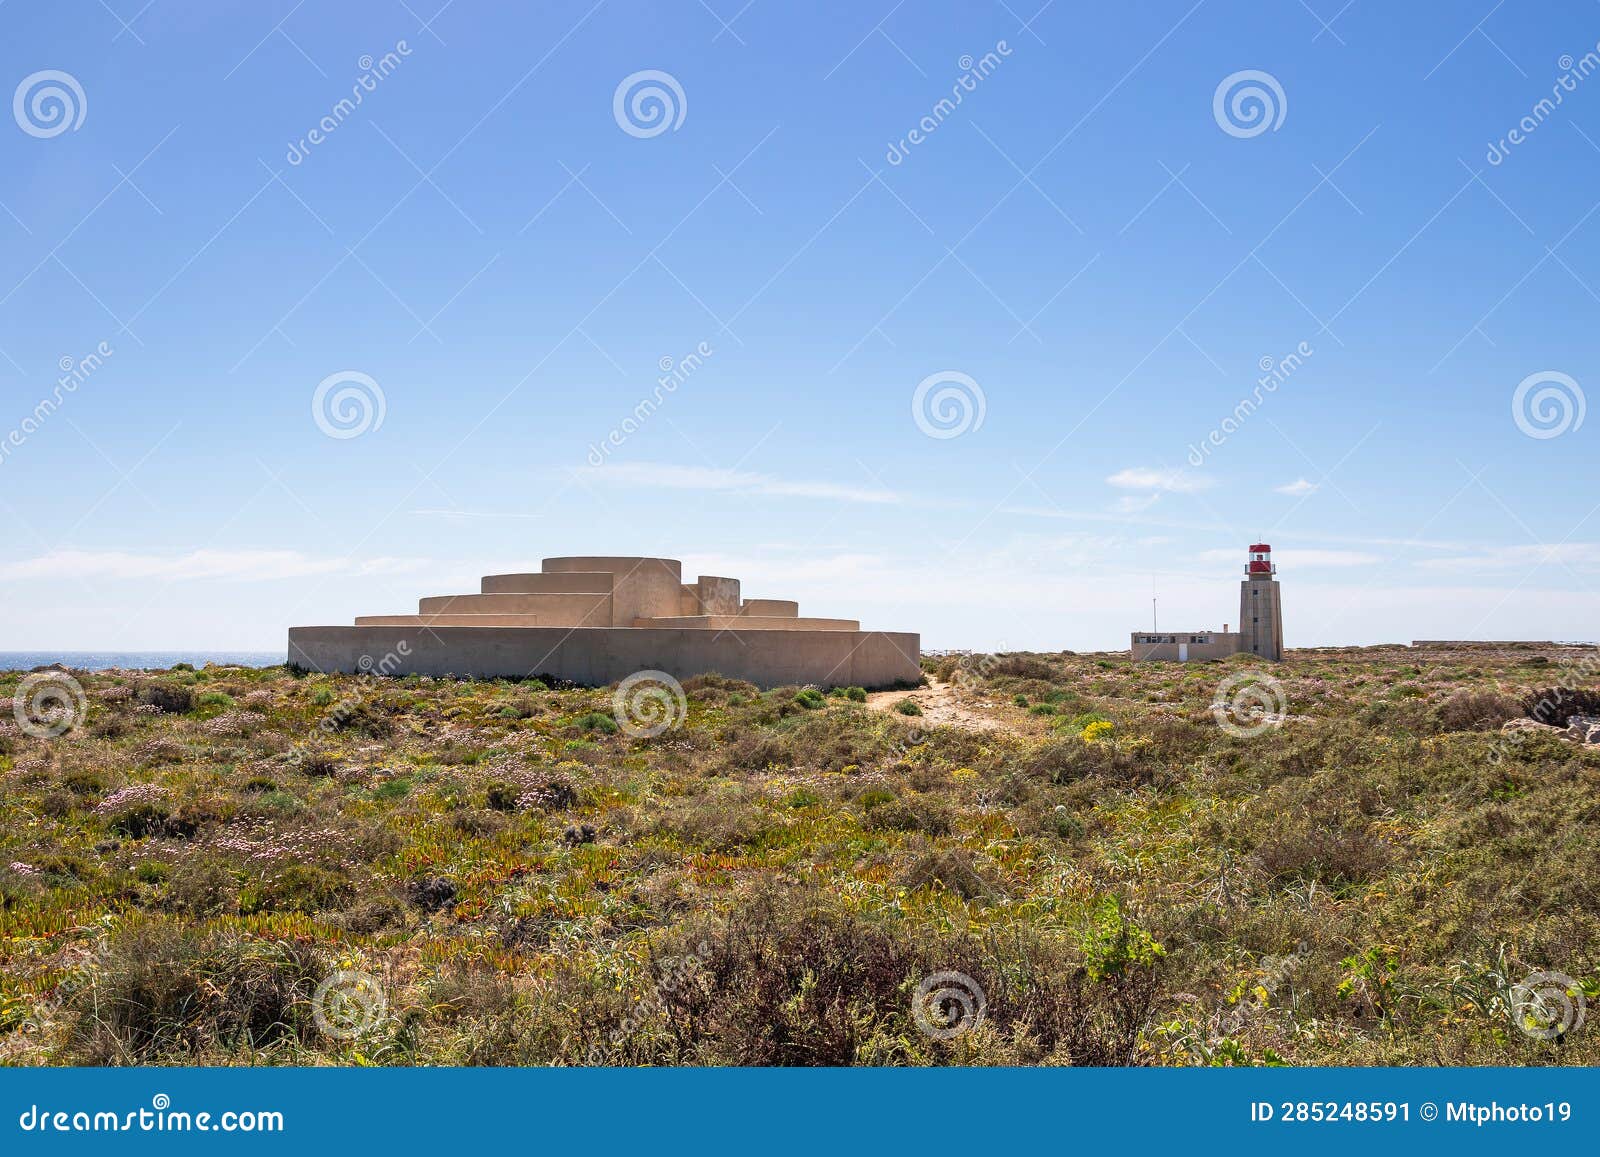 a voz do mar (a sound of the sea) installation and farol de sagres (lighthouse of ponta de sagres) located in algarve, portugal